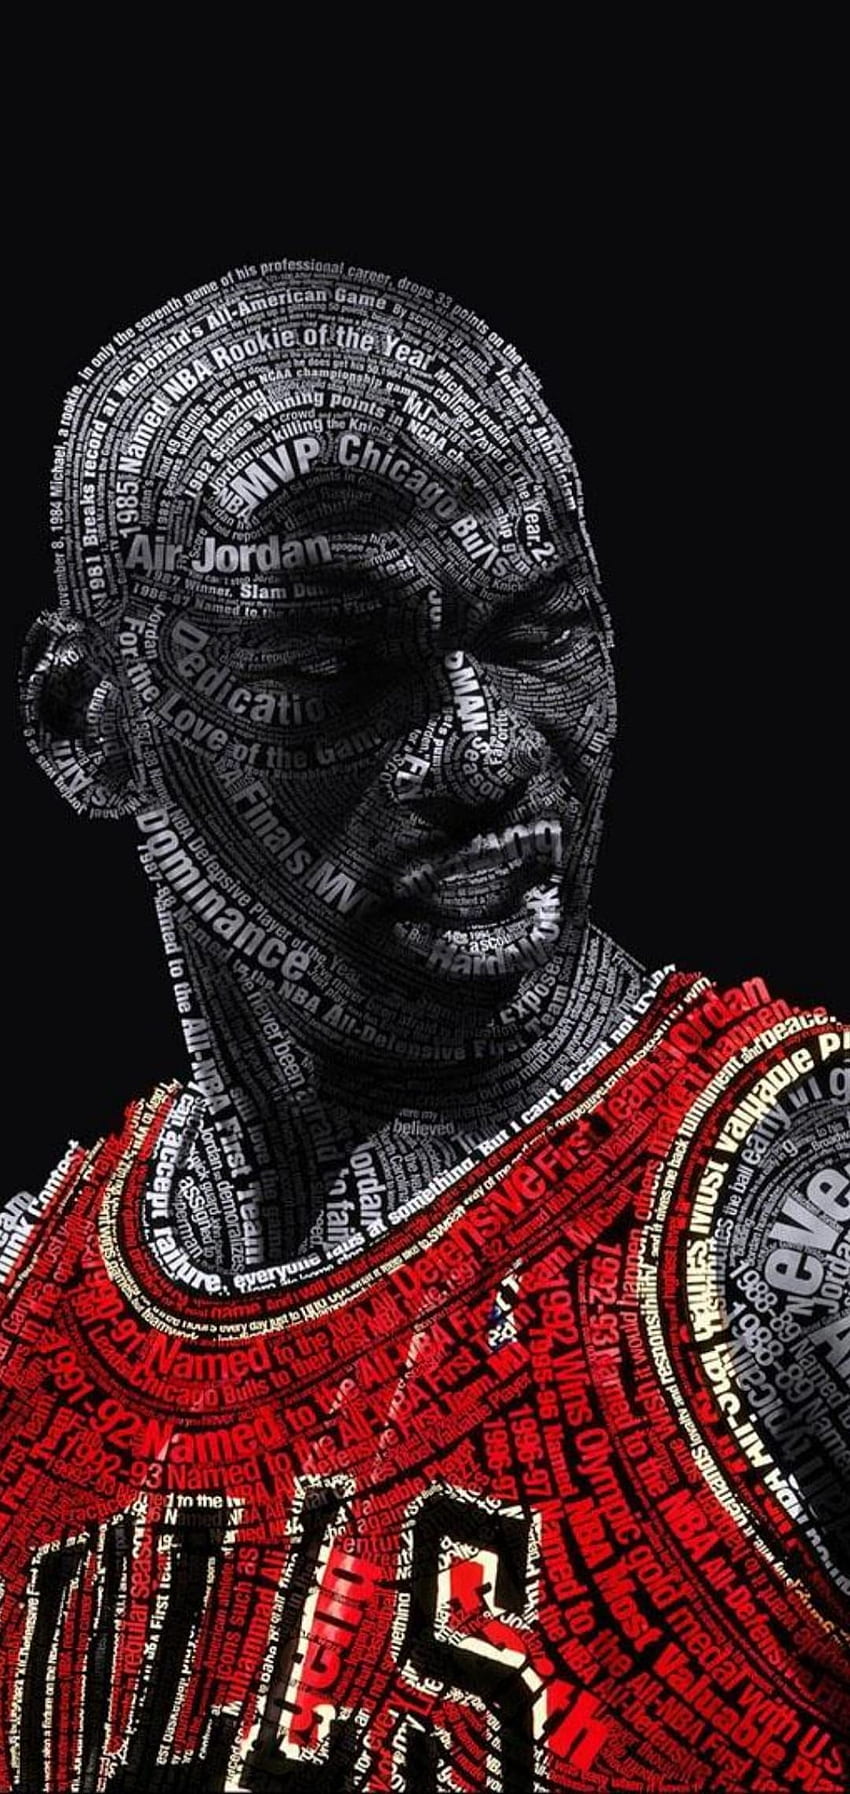 Jordan : Terbaik Terbaik dari Michael Jordan ( 2020 ), Jordan Art wallpaper ponsel HD